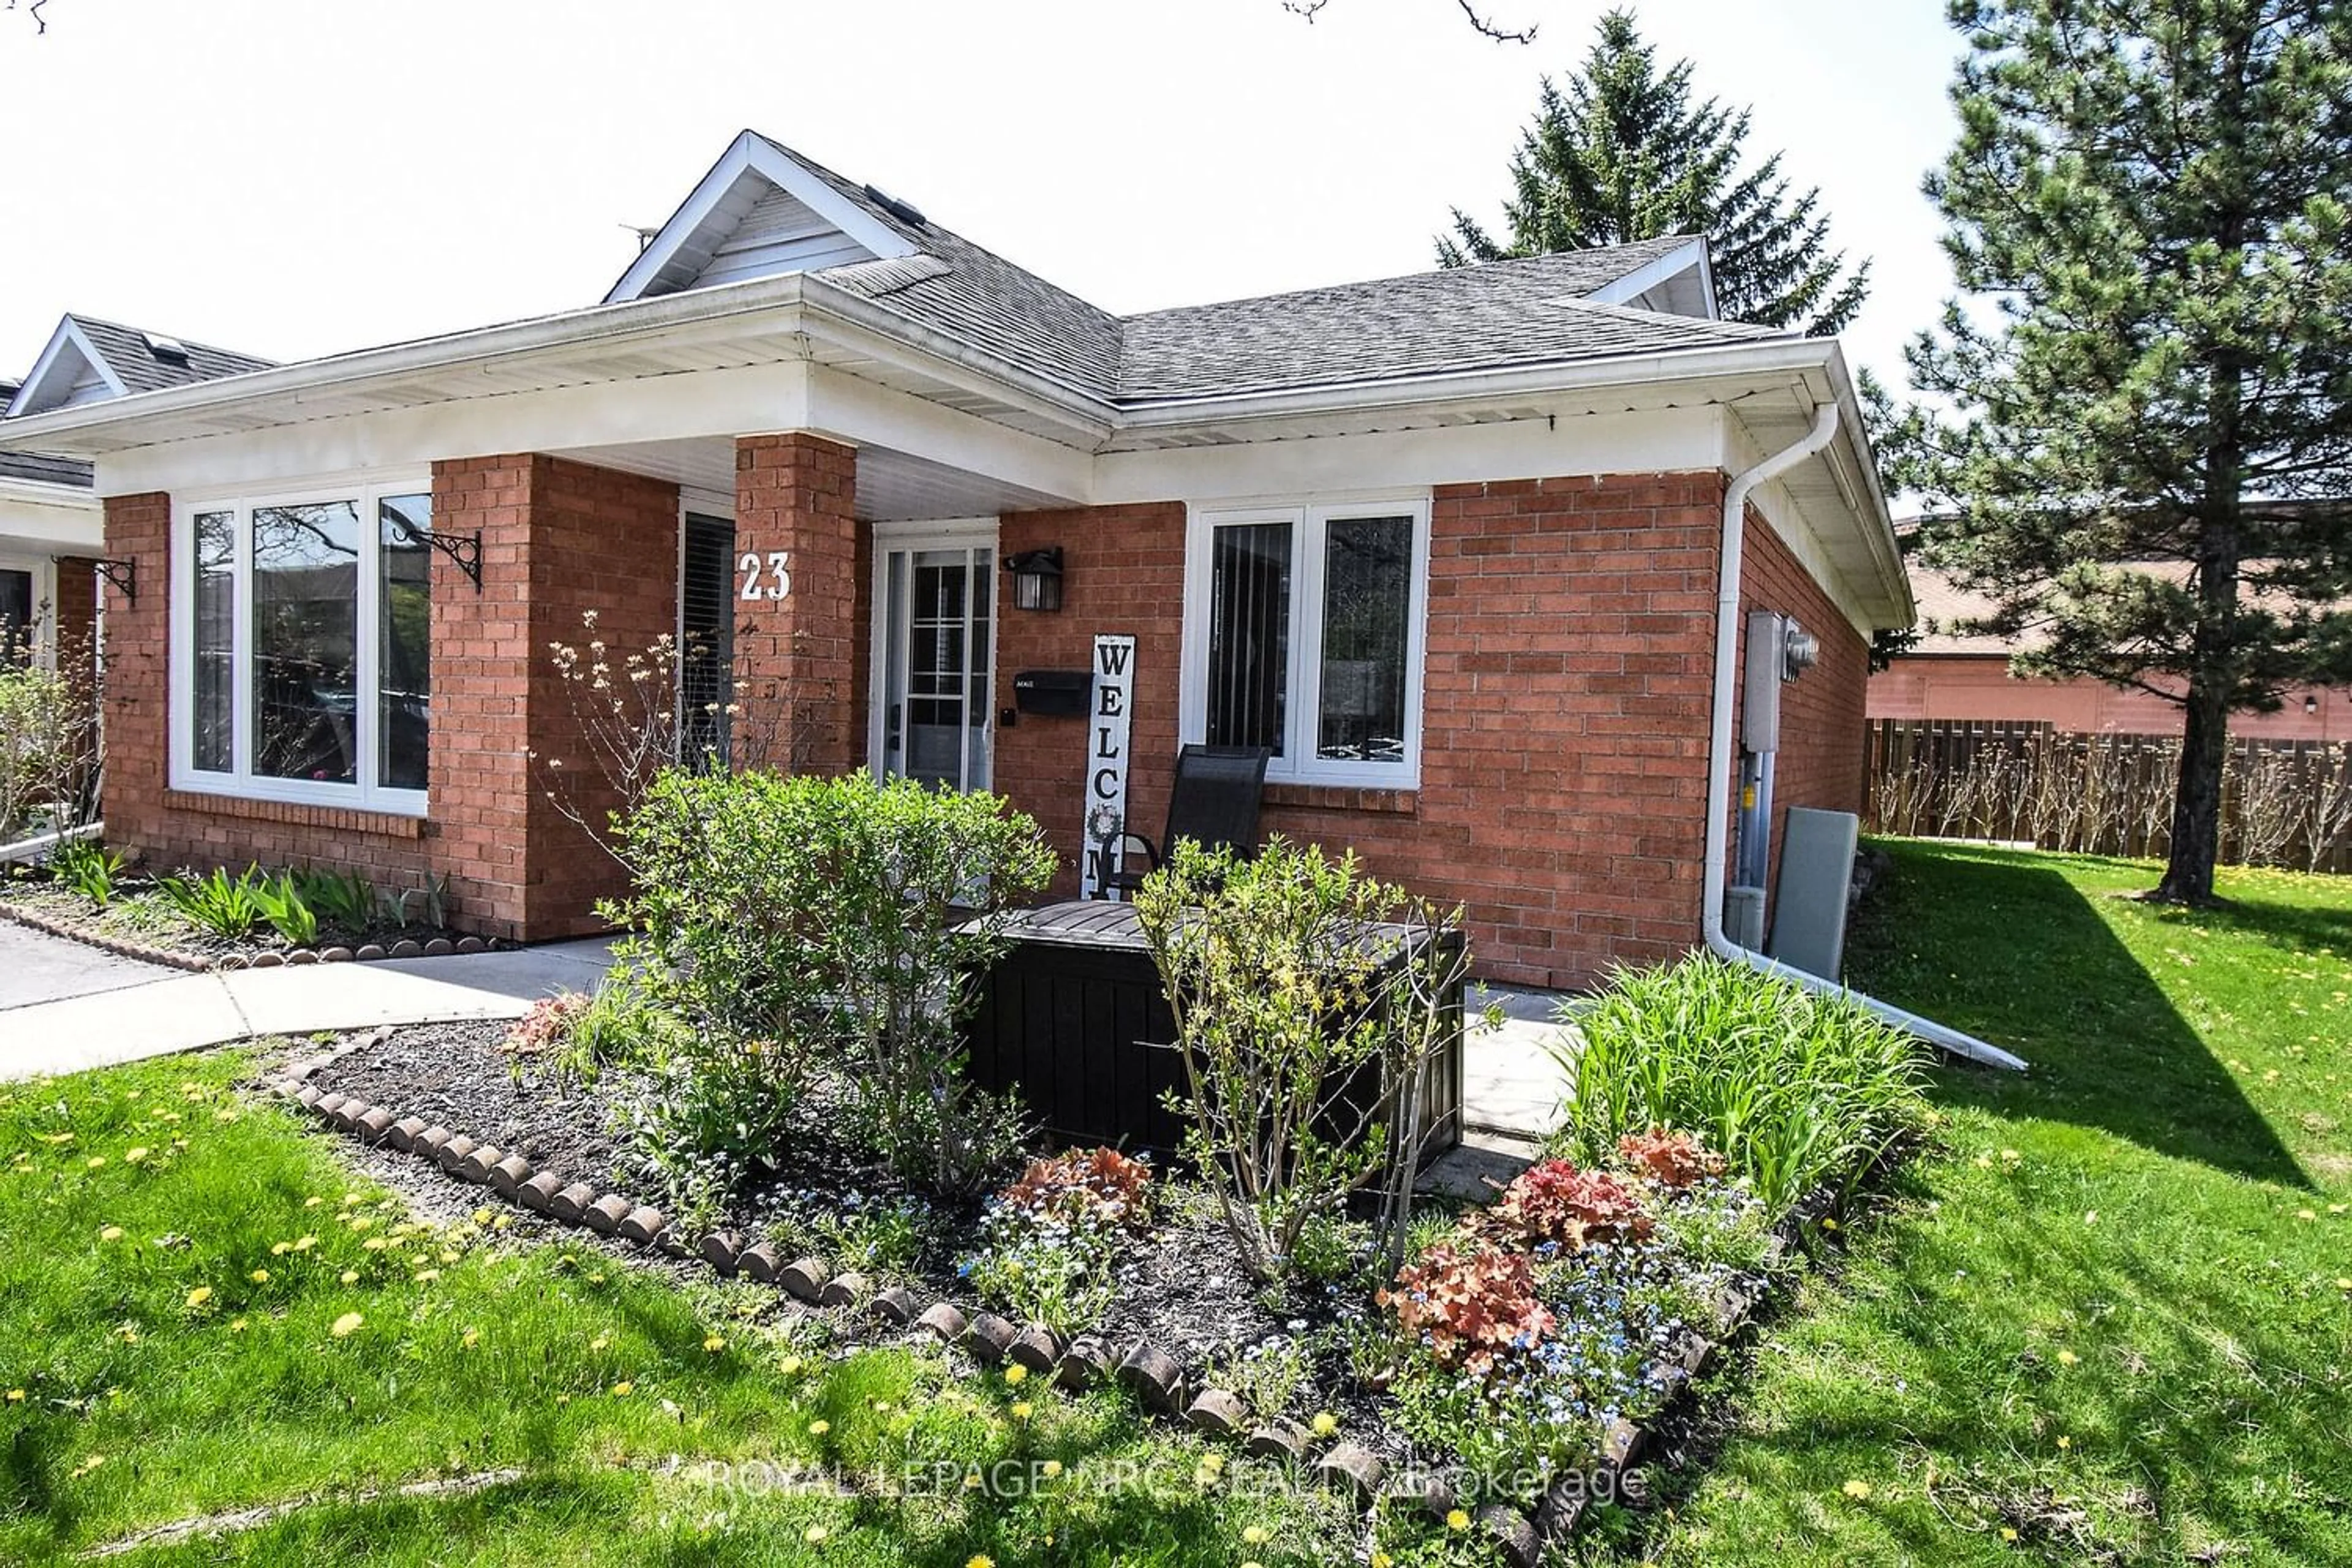 Home with brick exterior material for 23 Nova Cres #4, Welland Ontario L3C 6P8